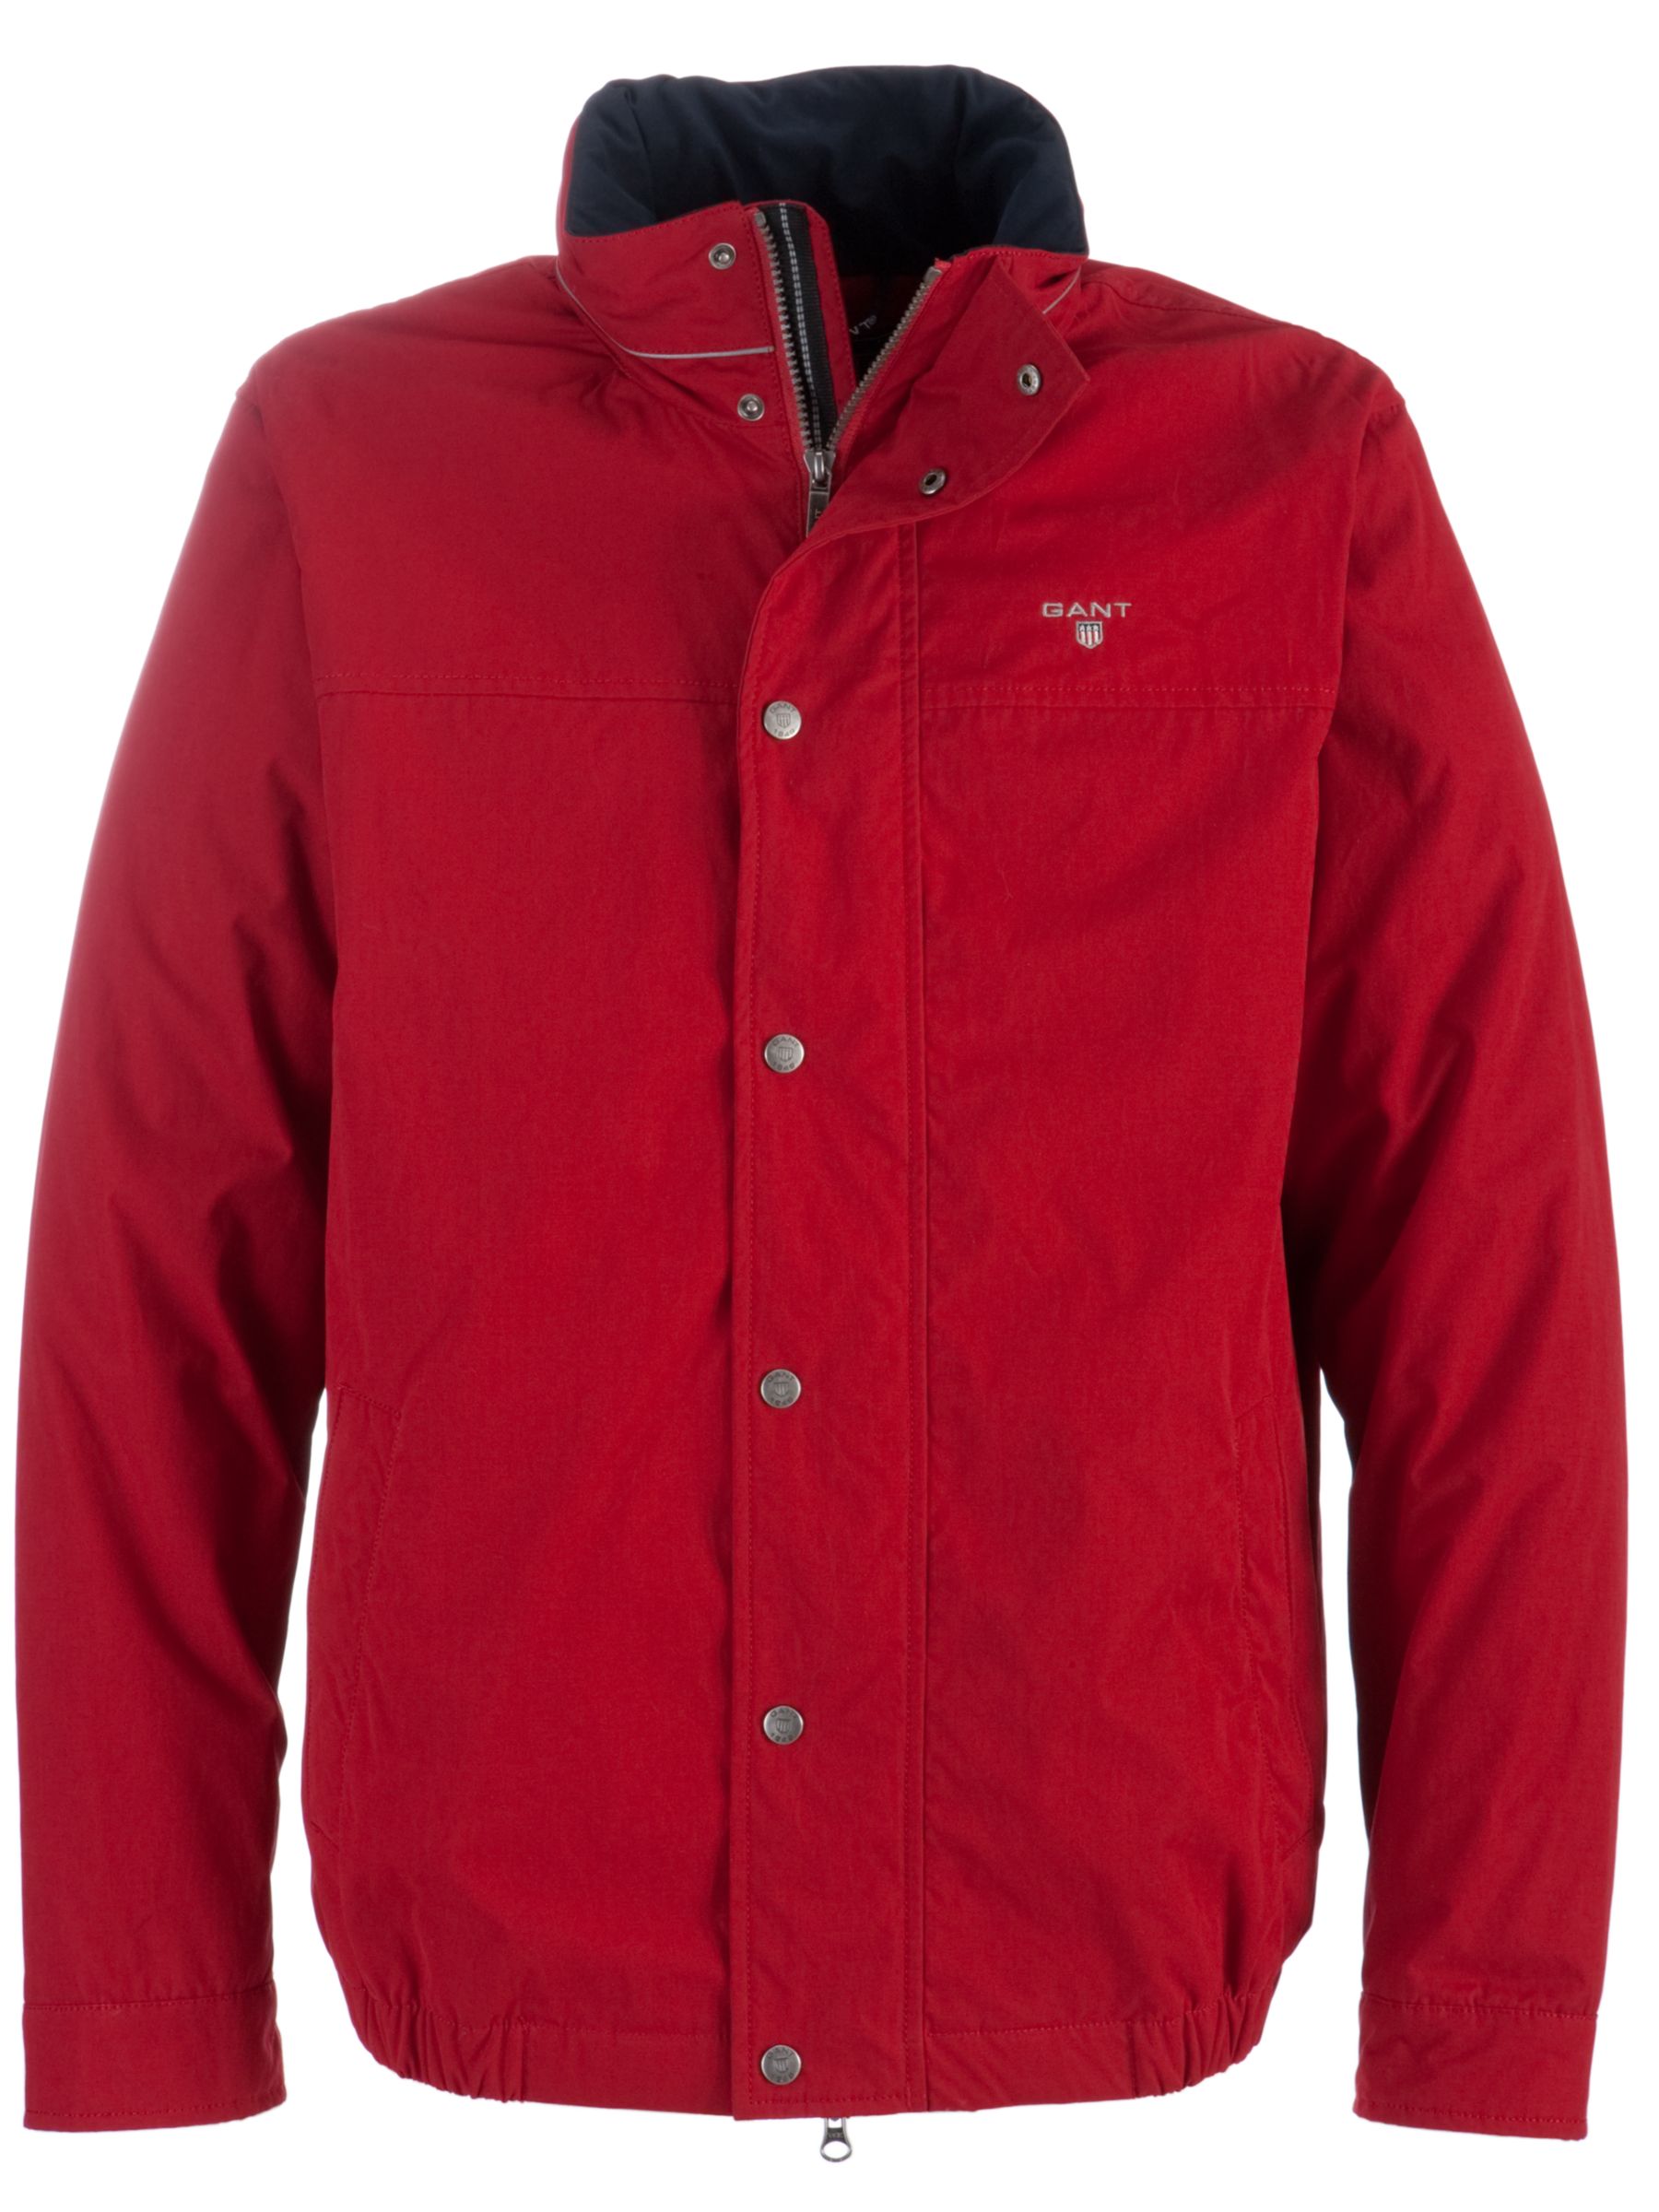 Gant W.N. Harbour Midlength Jacket, Red at John Lewis